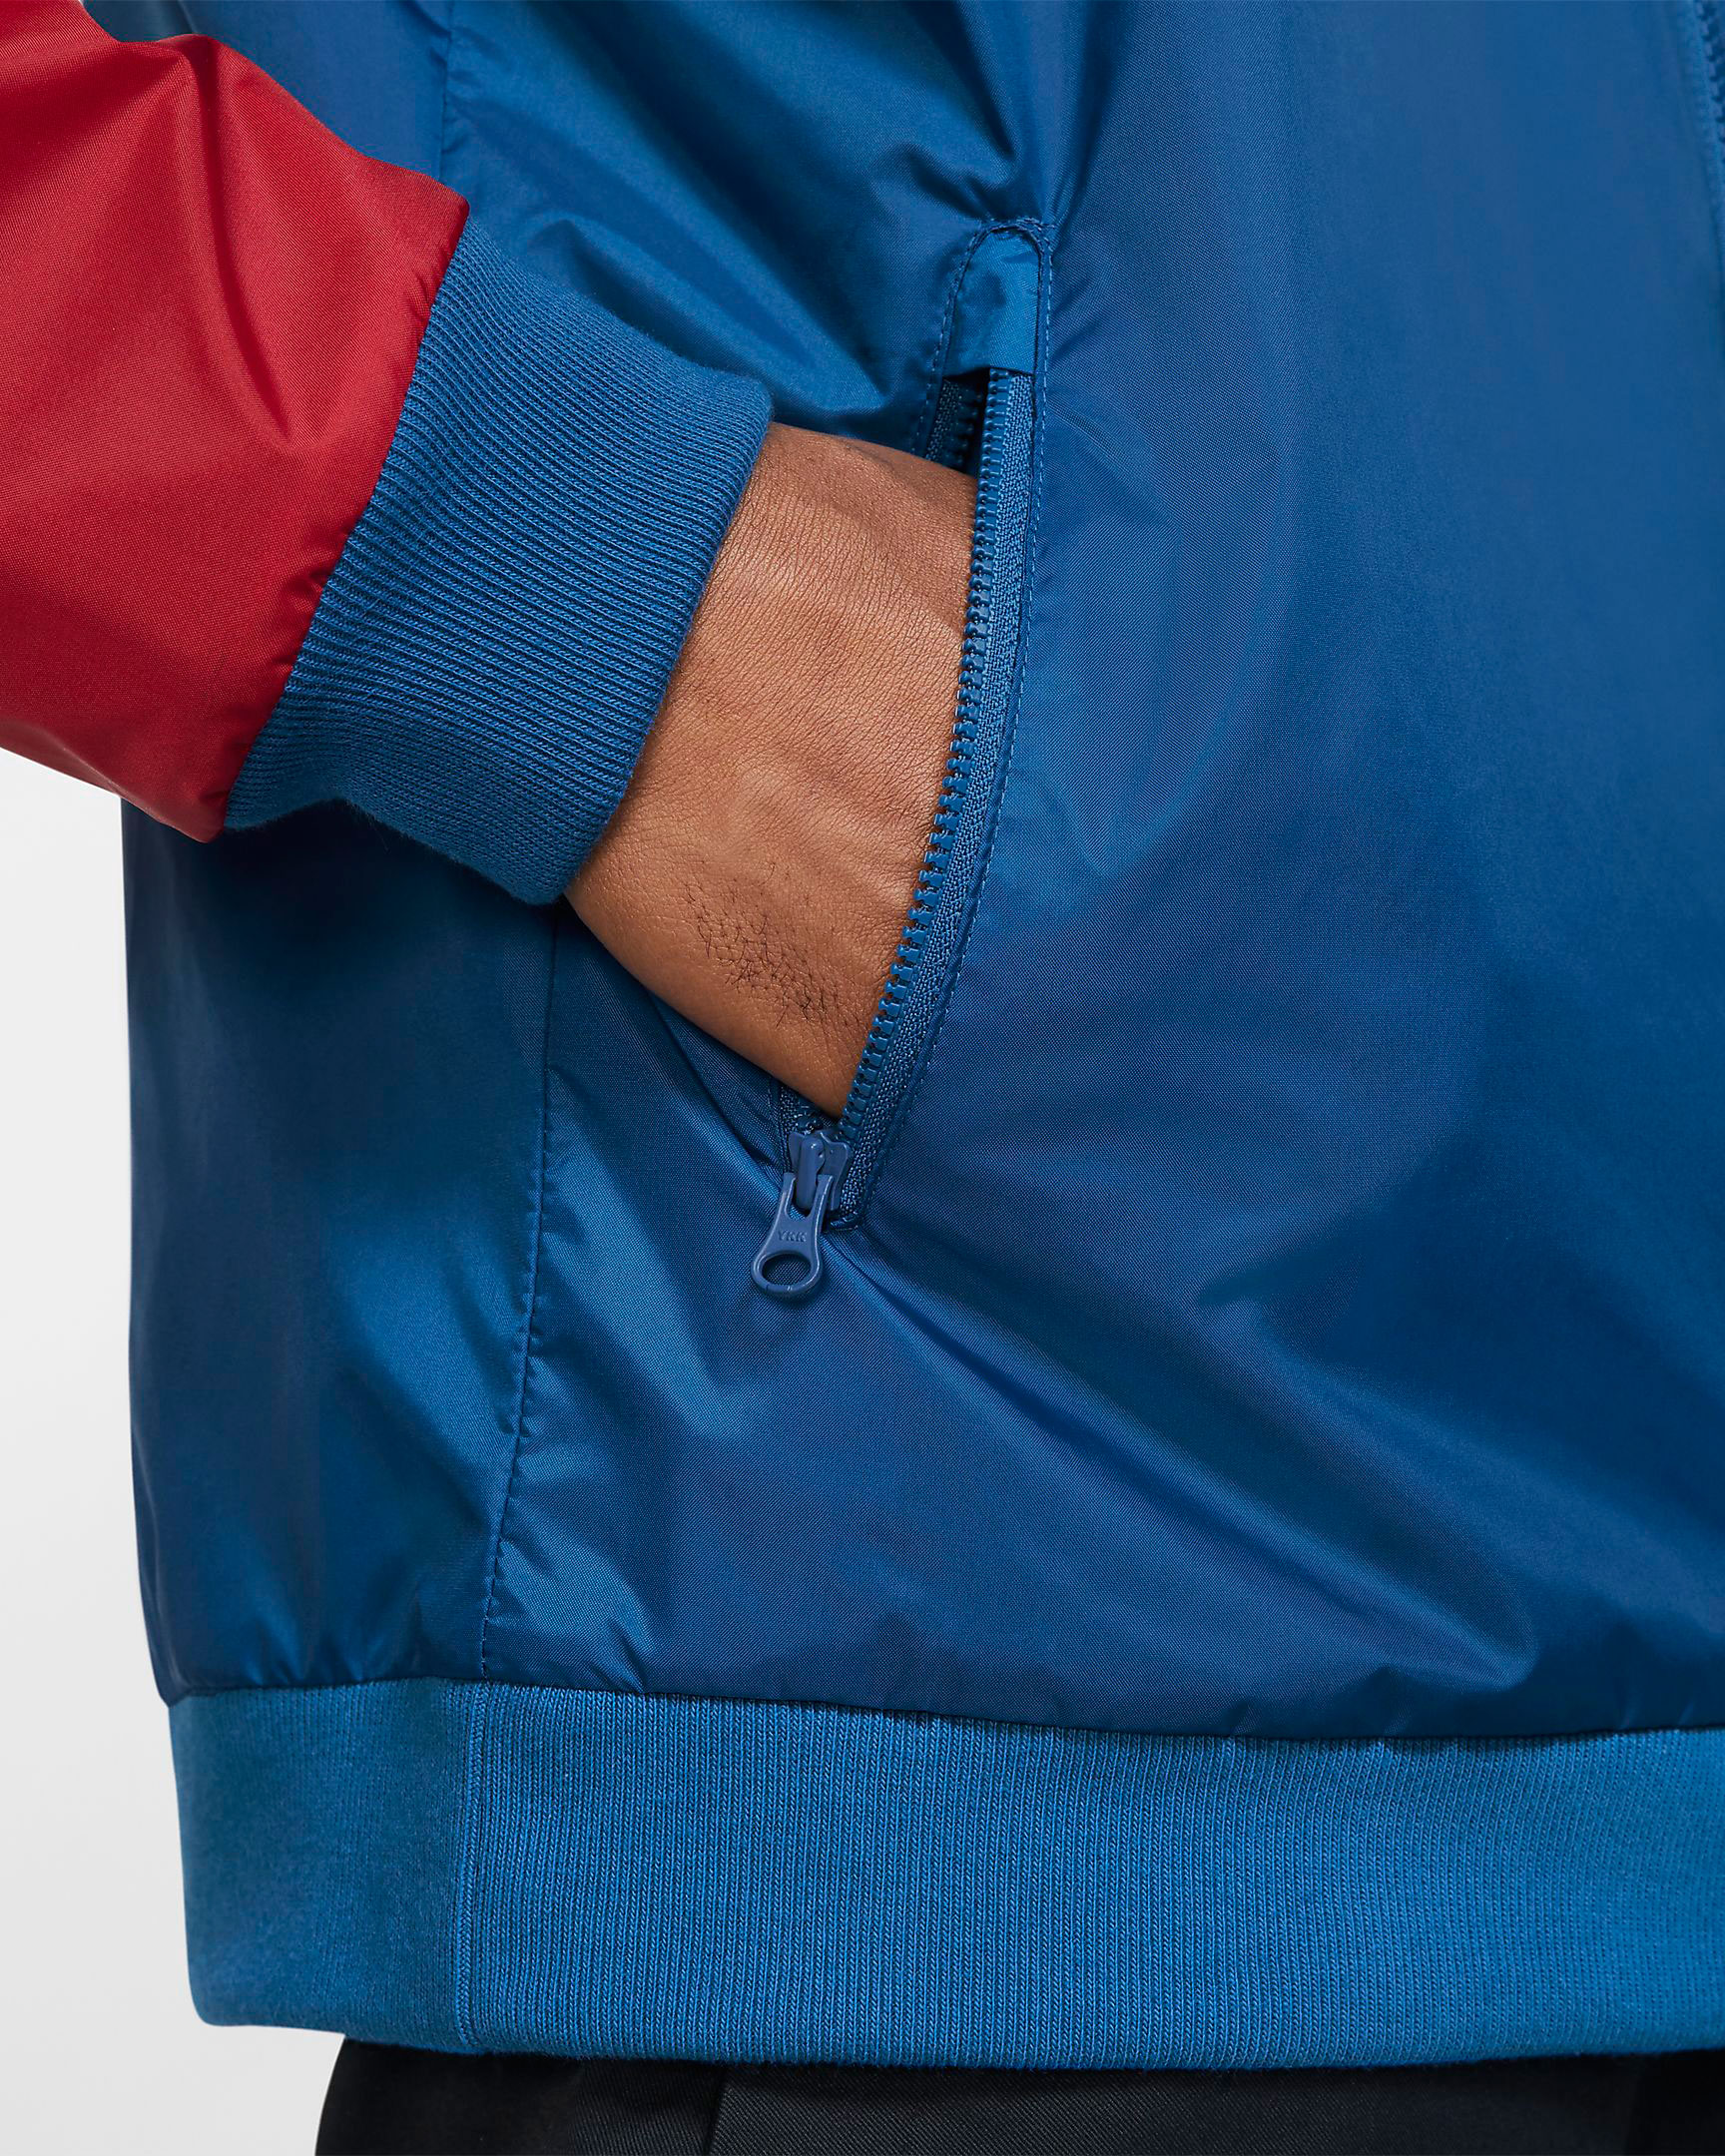 nike-americana-red-white-blue-windrunner-jacket-5